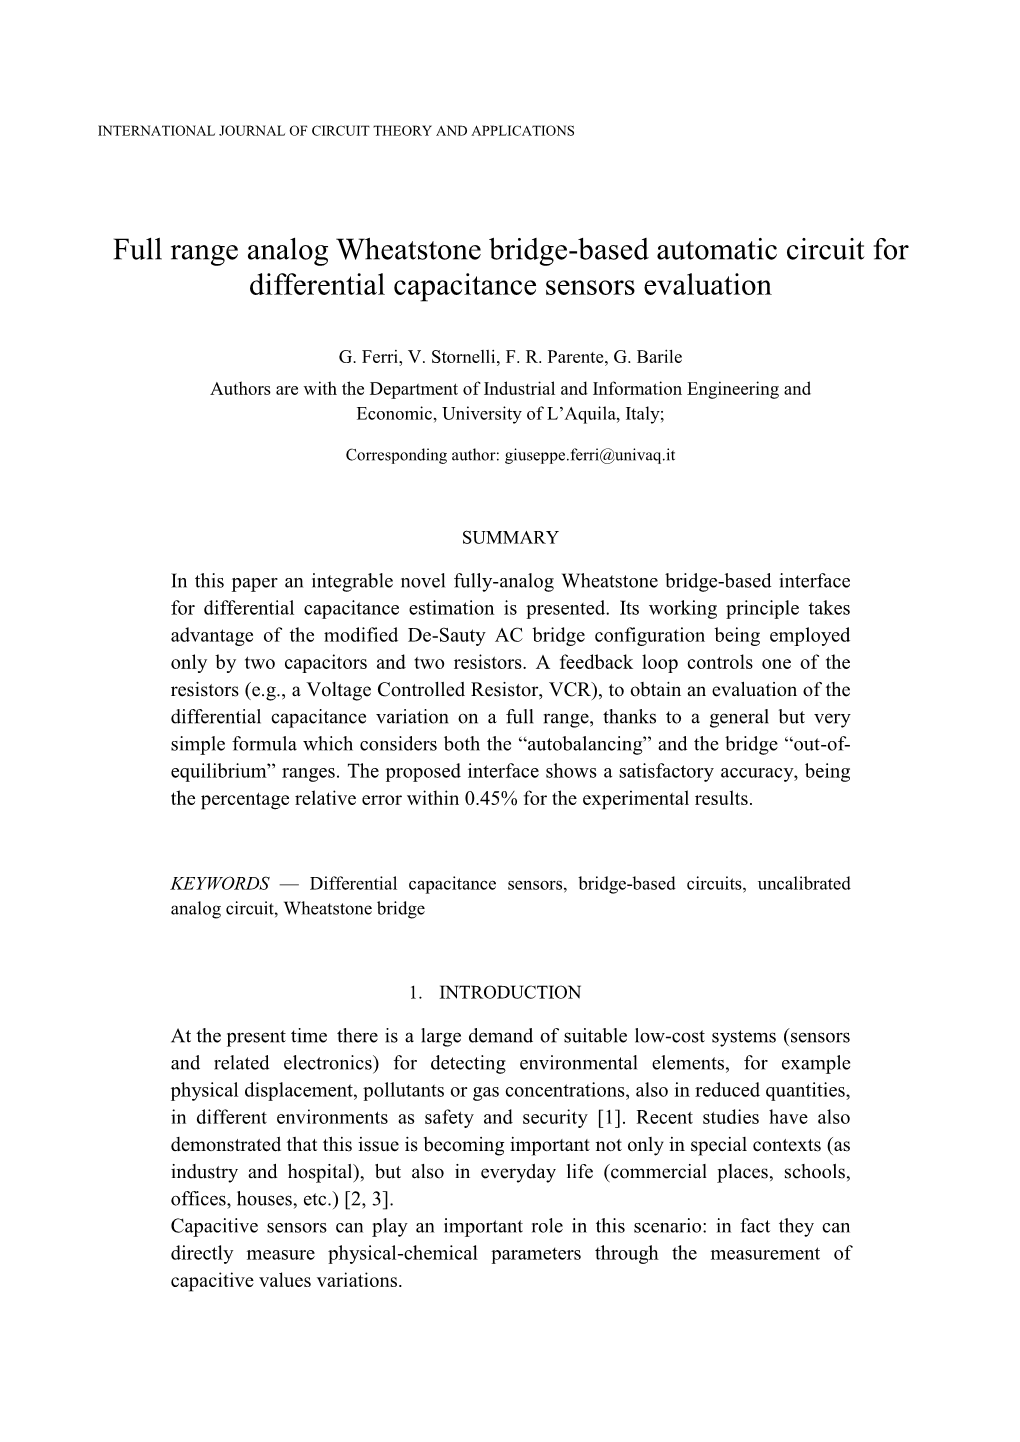 Full Range Analog Wheatstone Bridge-Based Automatic Circuit